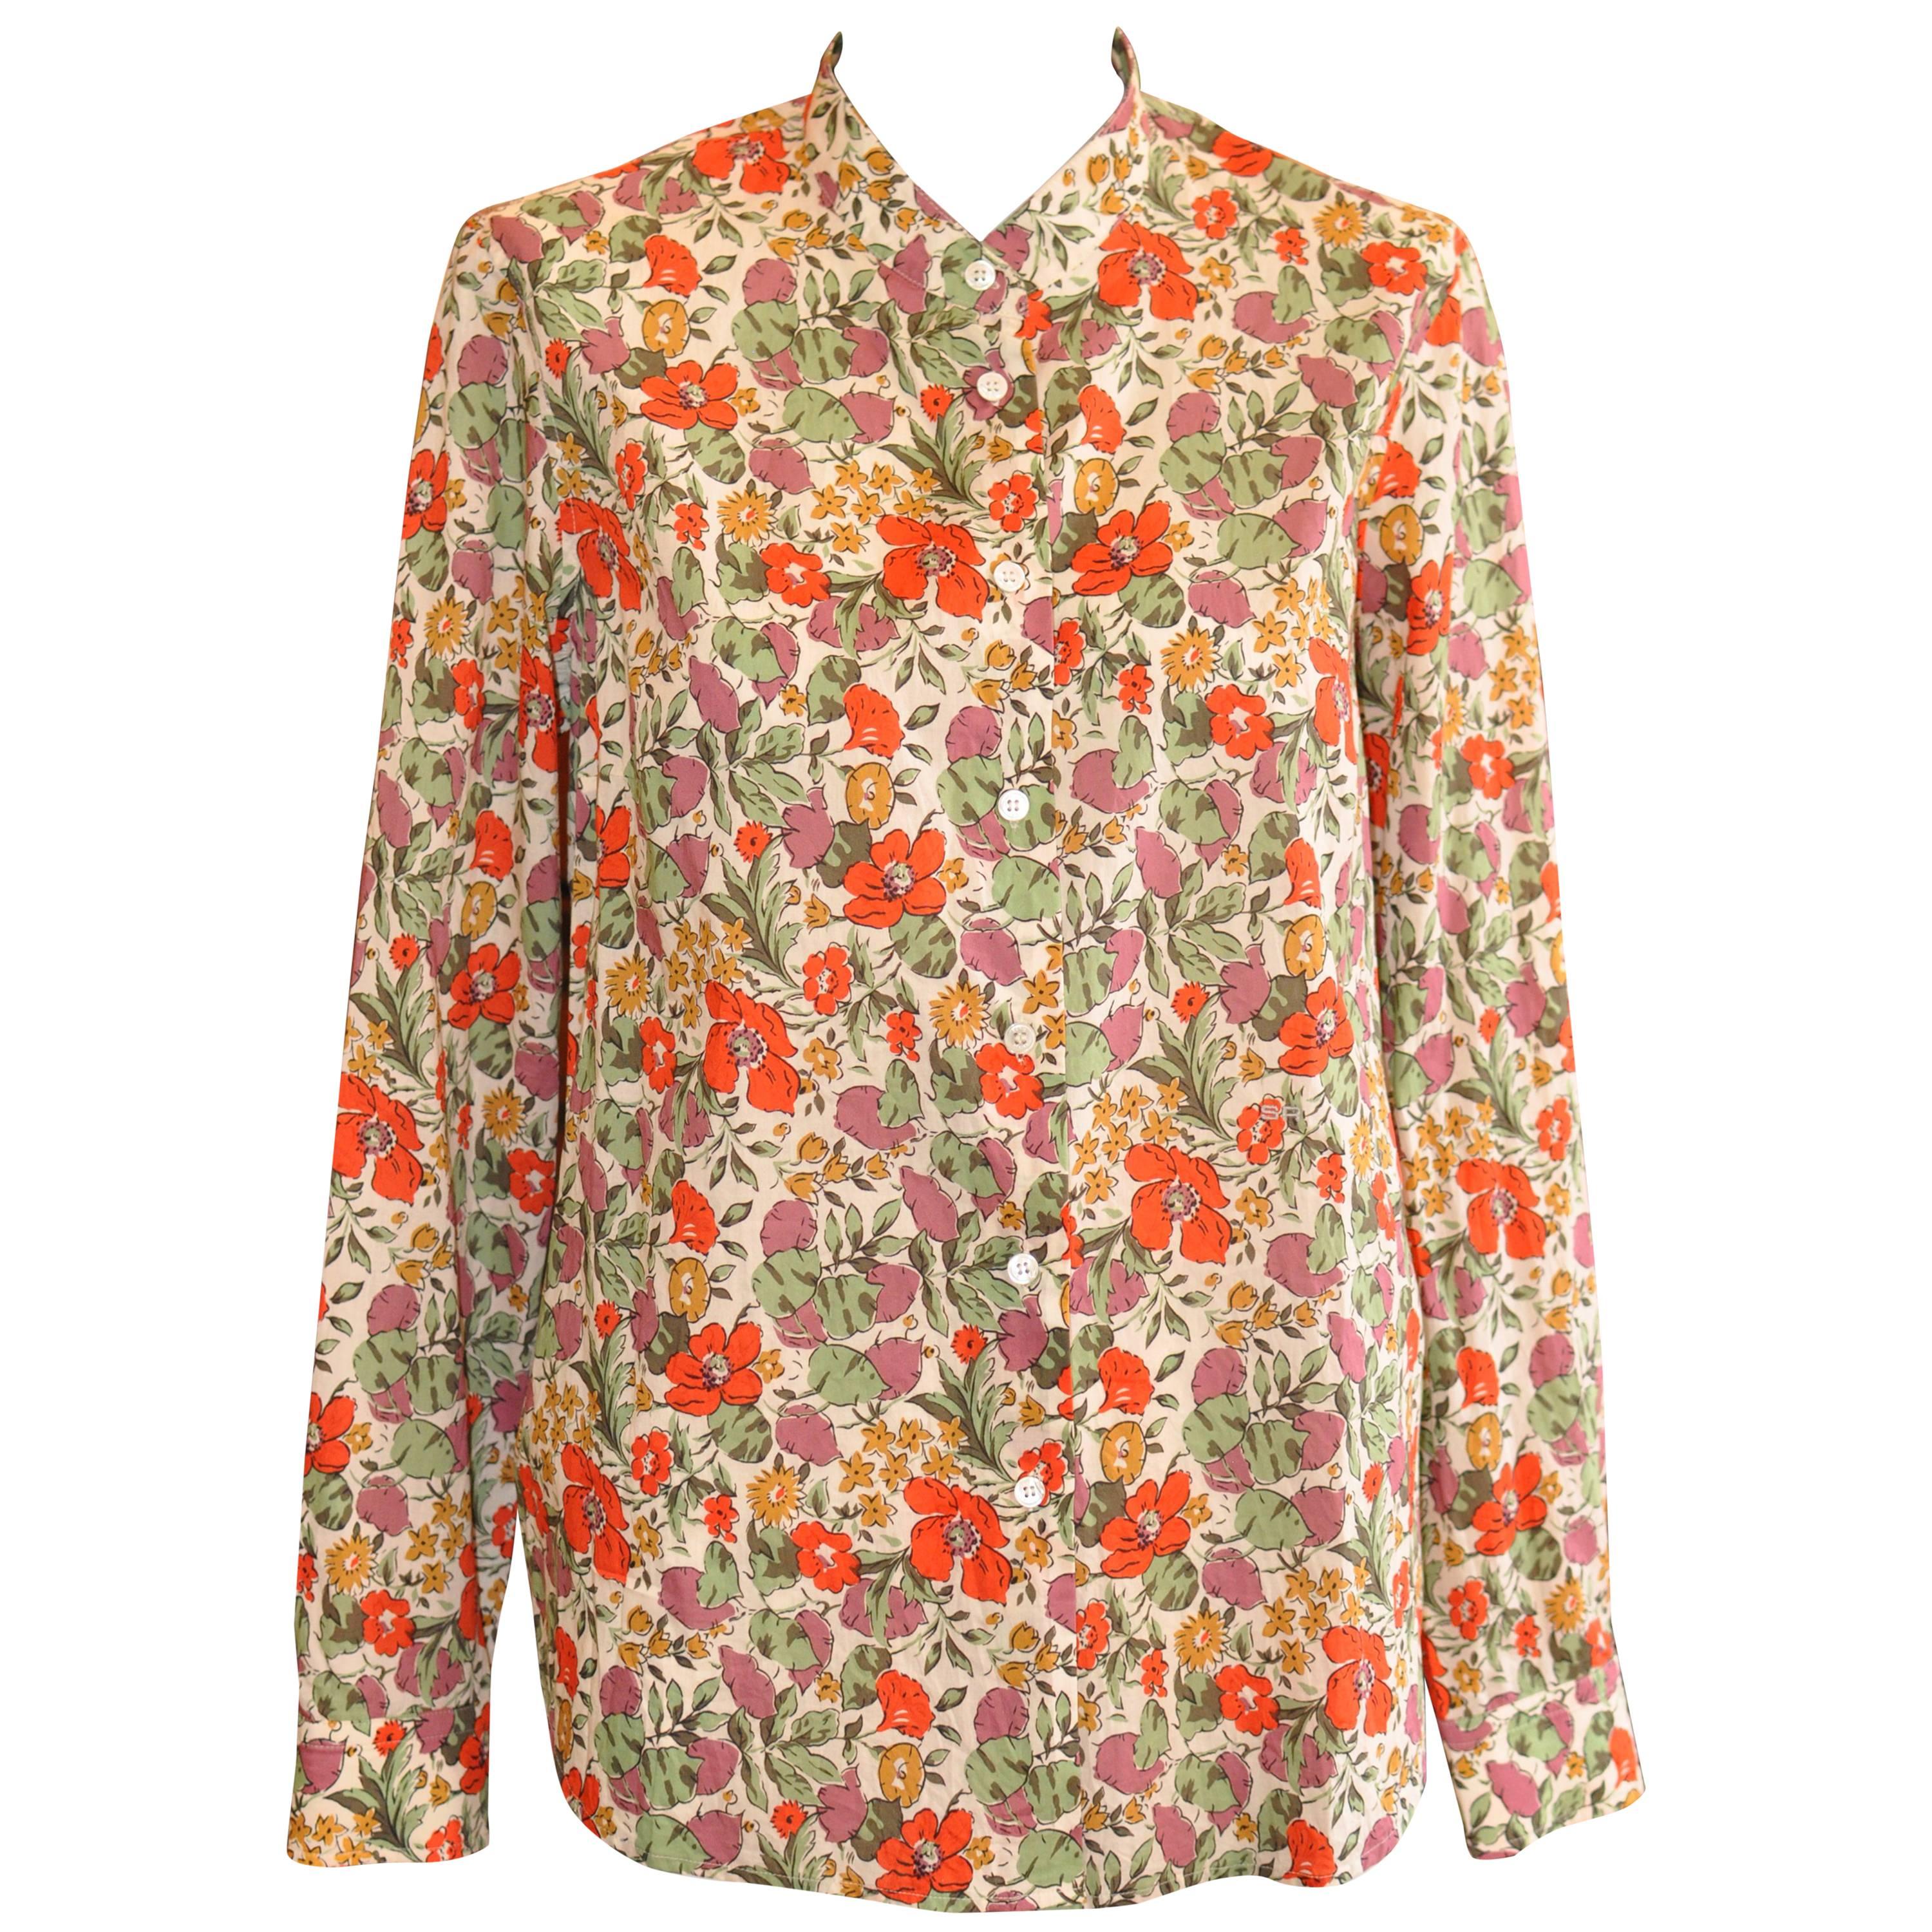 Sonia Rykiel Cotton Floral Shirt (44 Fr)